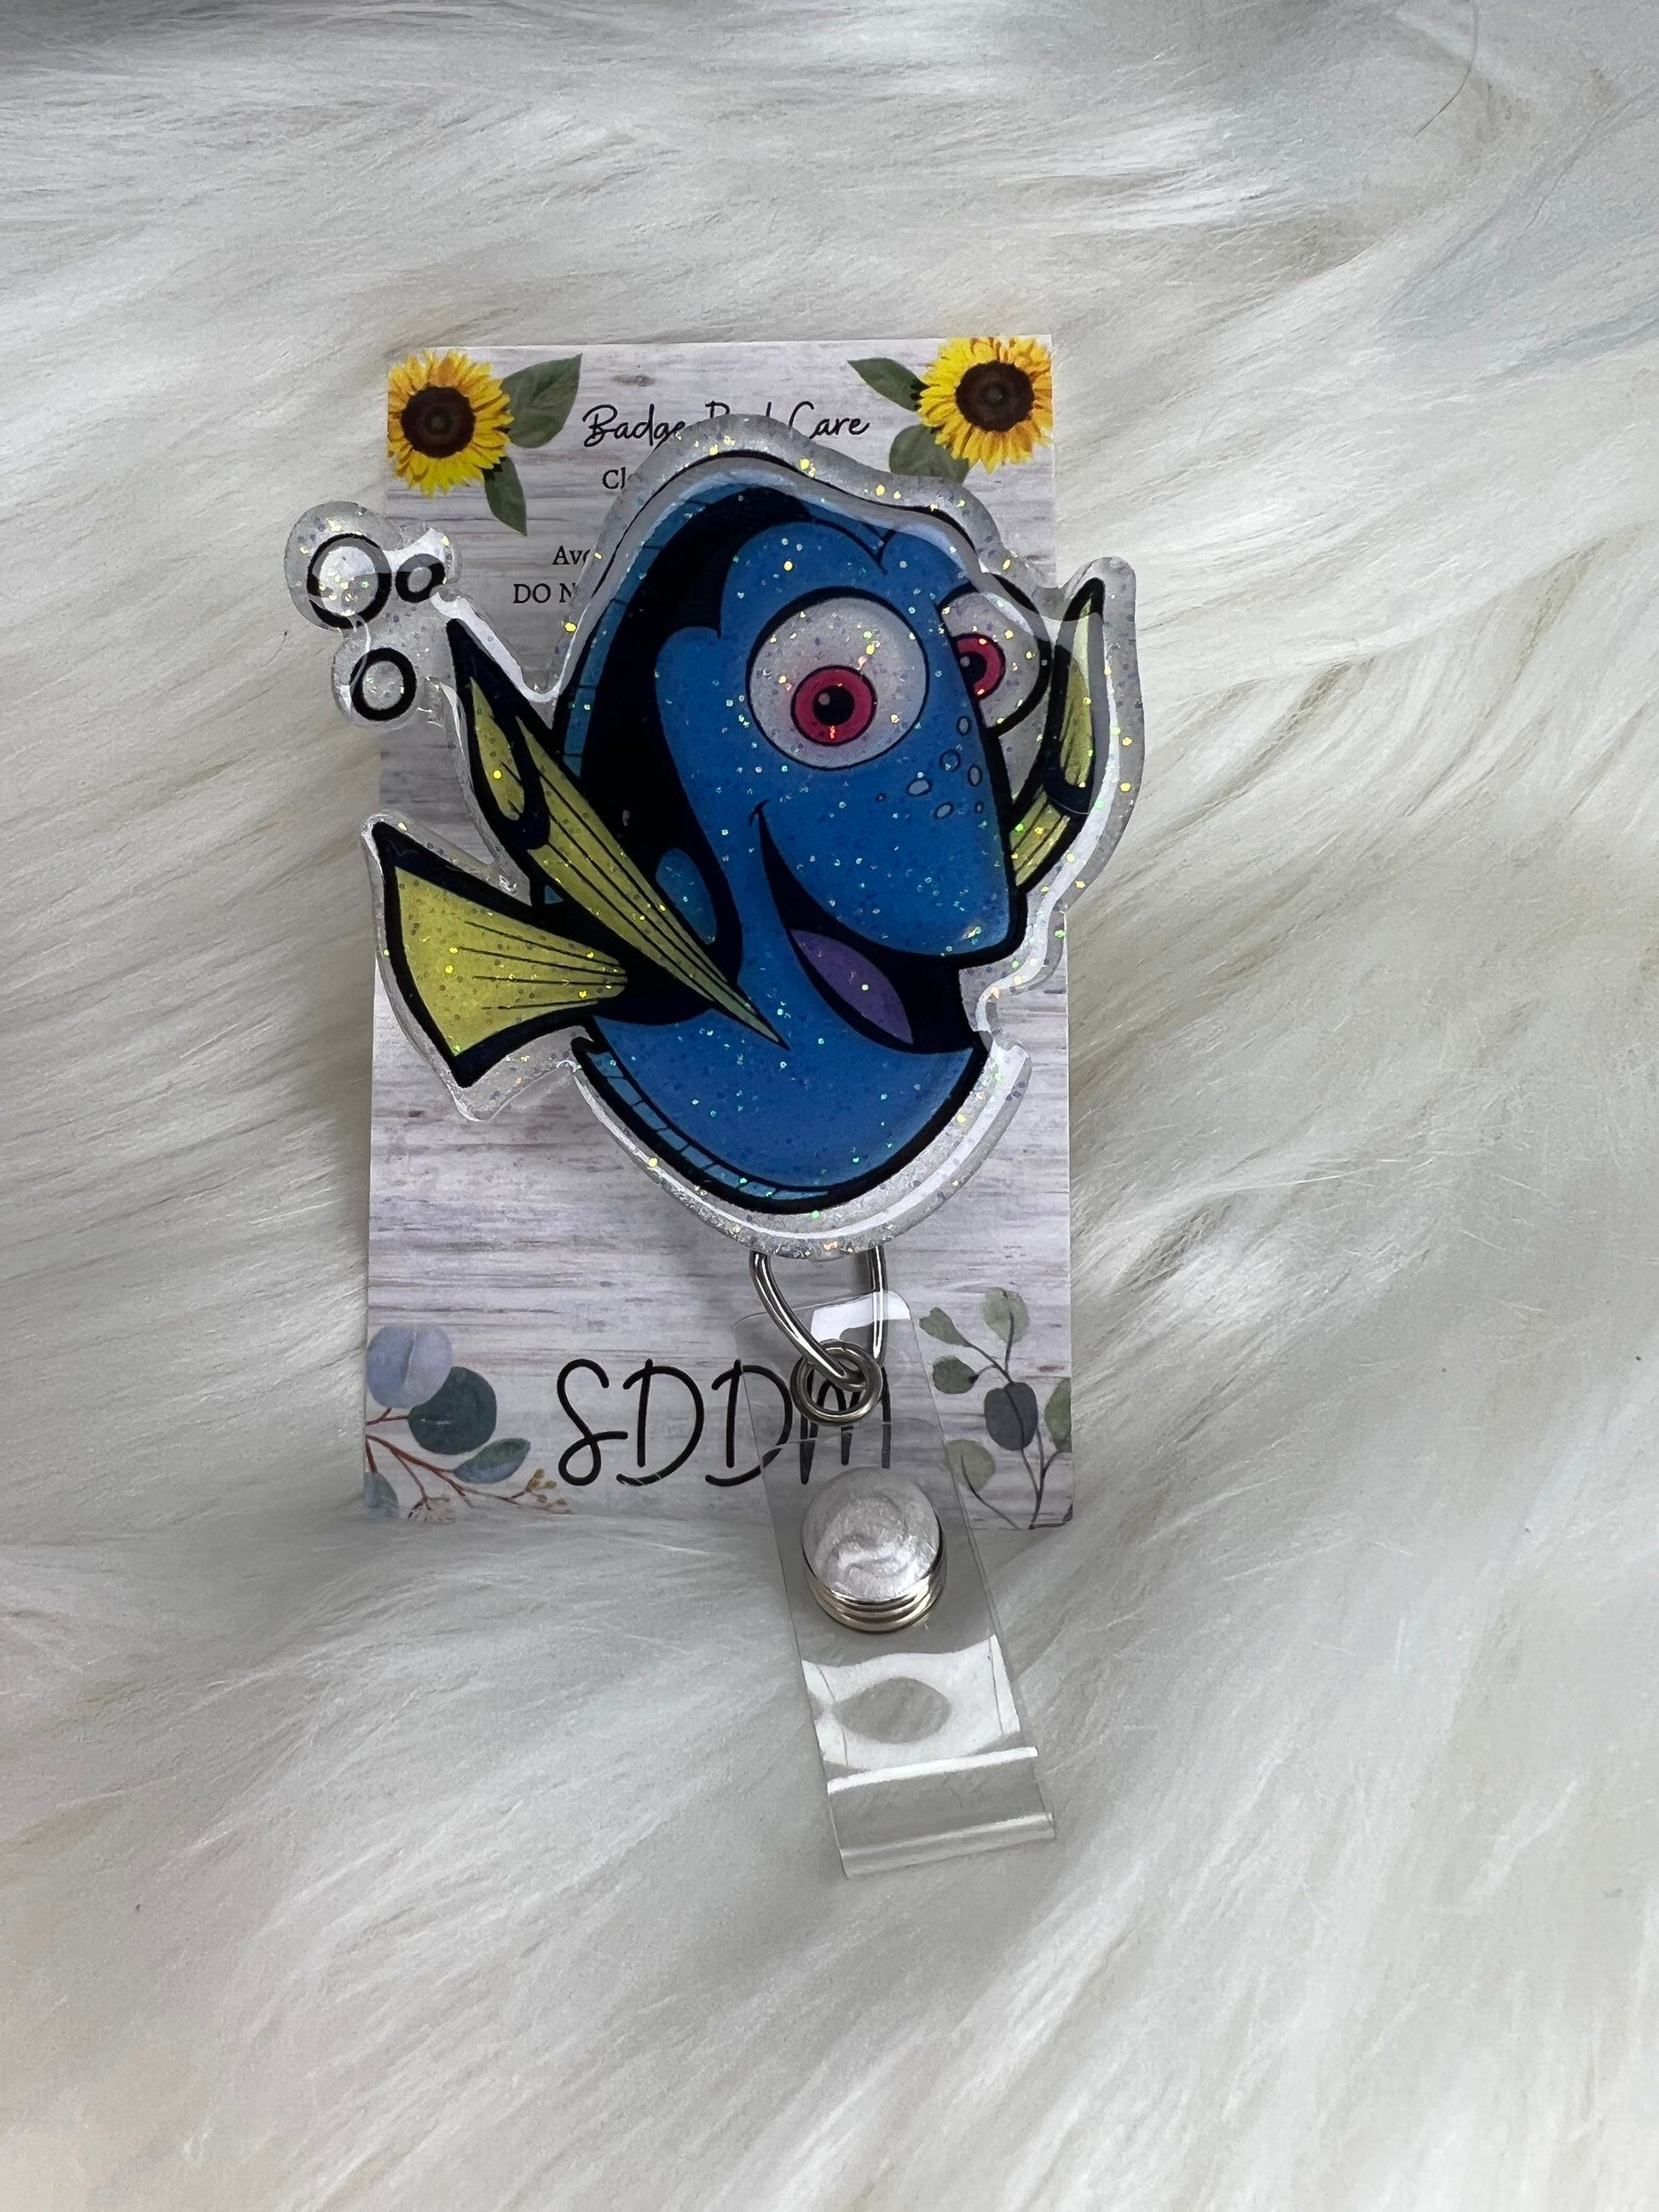 Blue fish inspired badge reel- movie character inspired badge holder- badge reel- nurse gifts- mri safe- lanyard